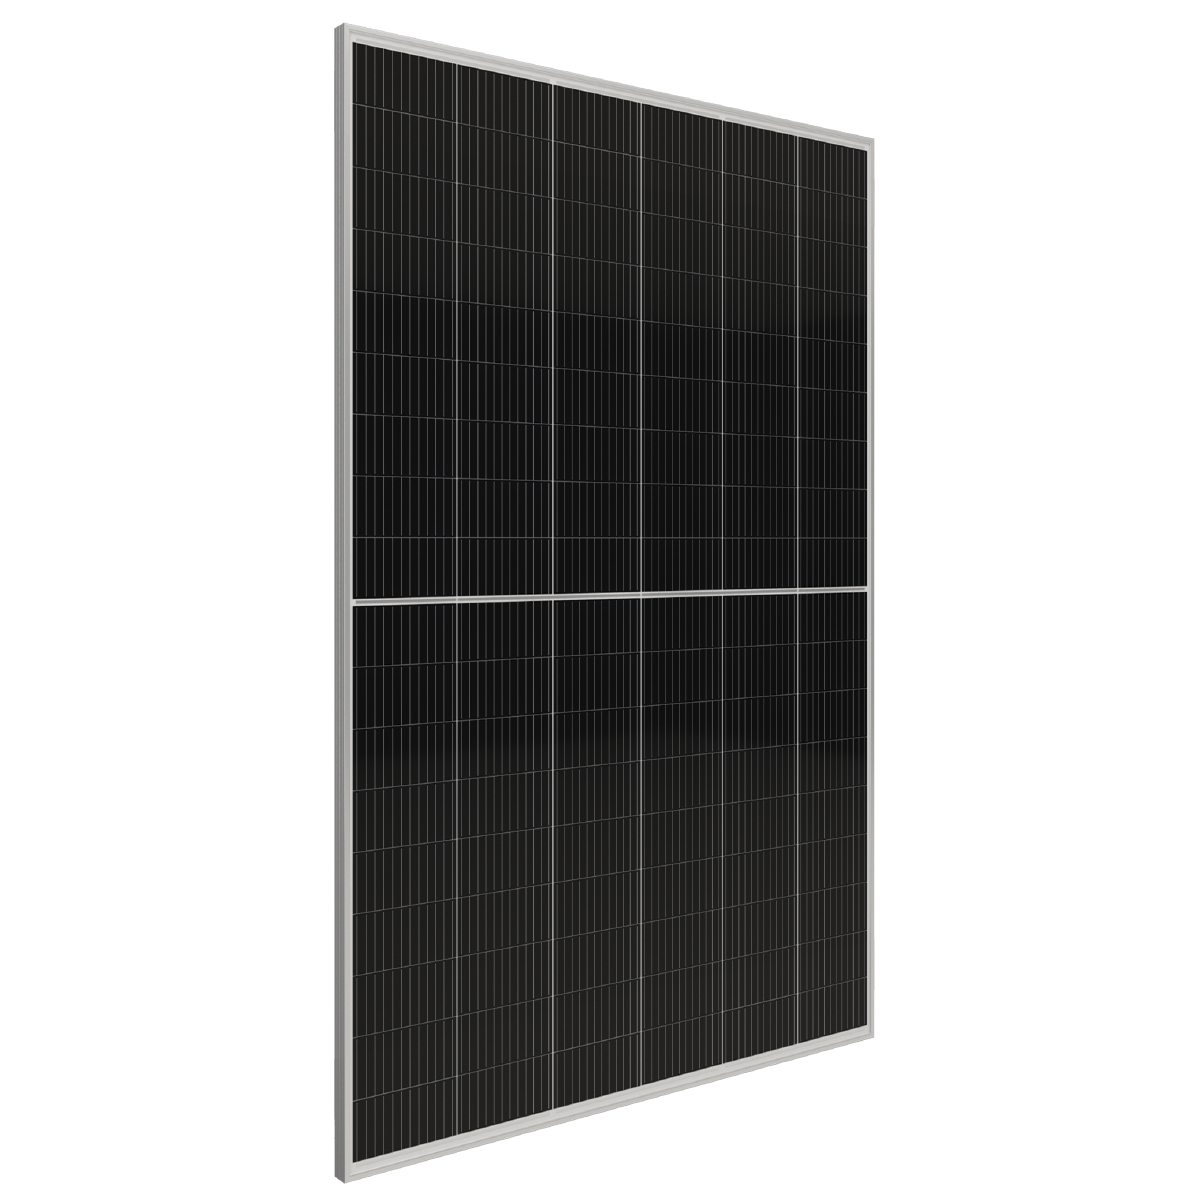 TommaTech 540Wp M12 108PM Cells Half-Cut MB Solar Panel